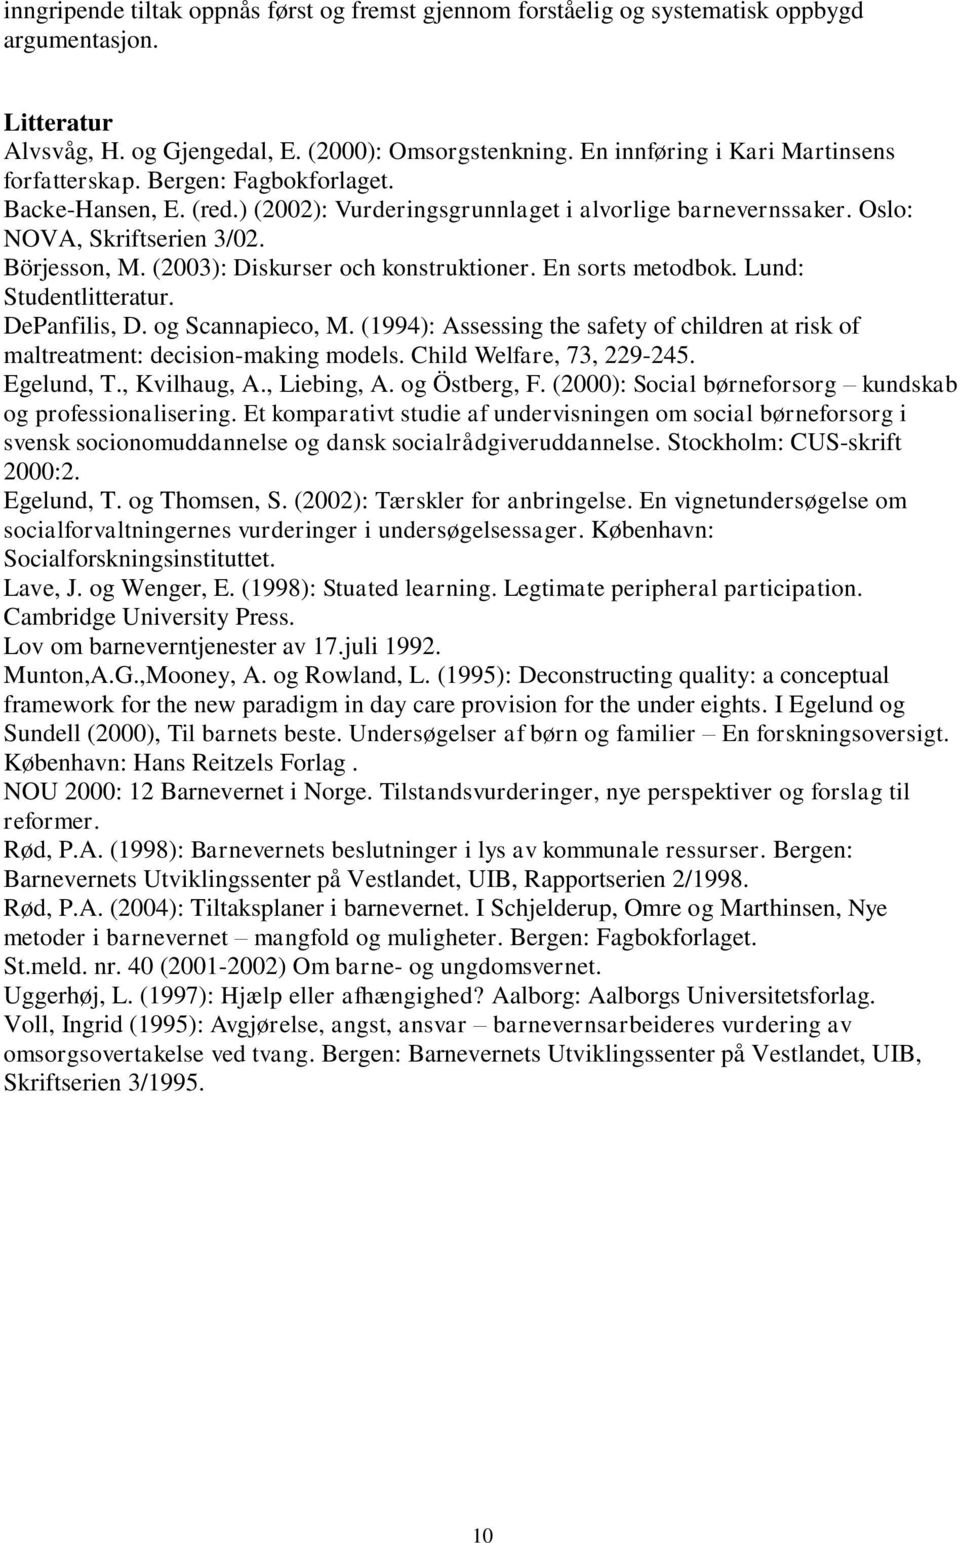 (2003): Diskurser och konstruktioner. En sorts metodbok. Lund: Studentlitteratur. DePanfilis, D. og Scannapieco, M.